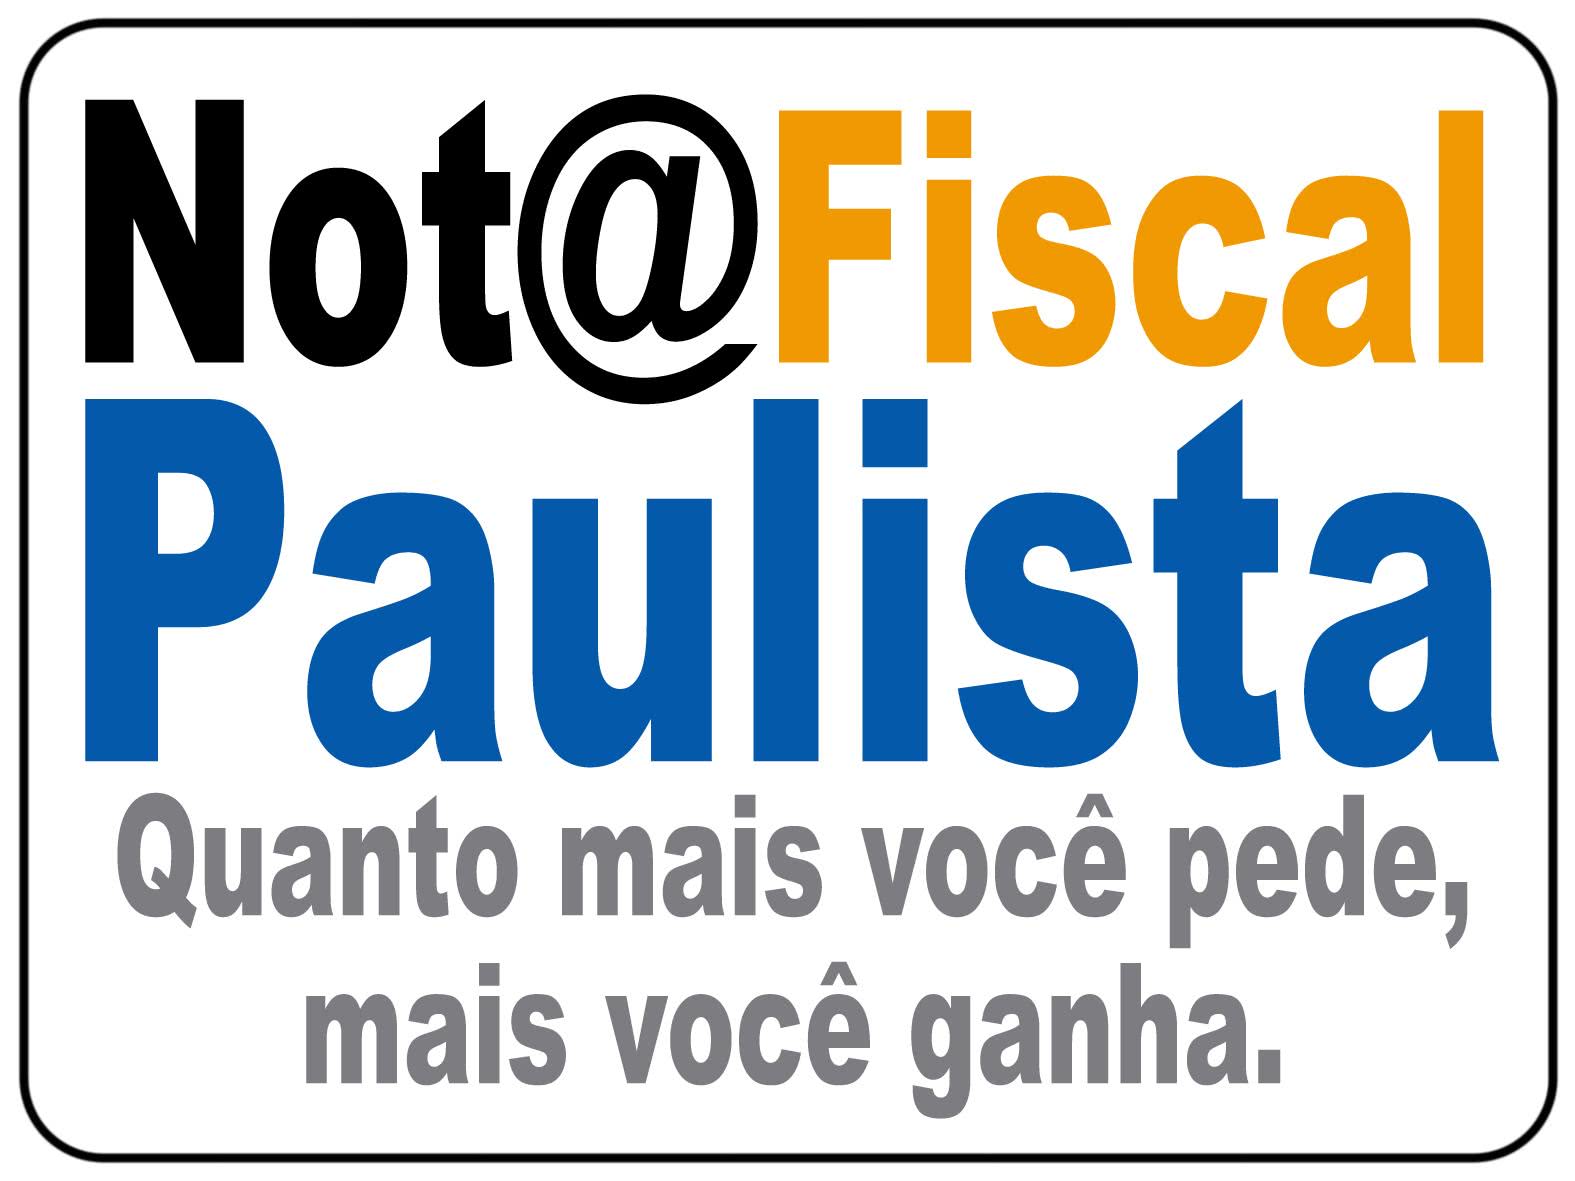 nota-fiscal-paulista